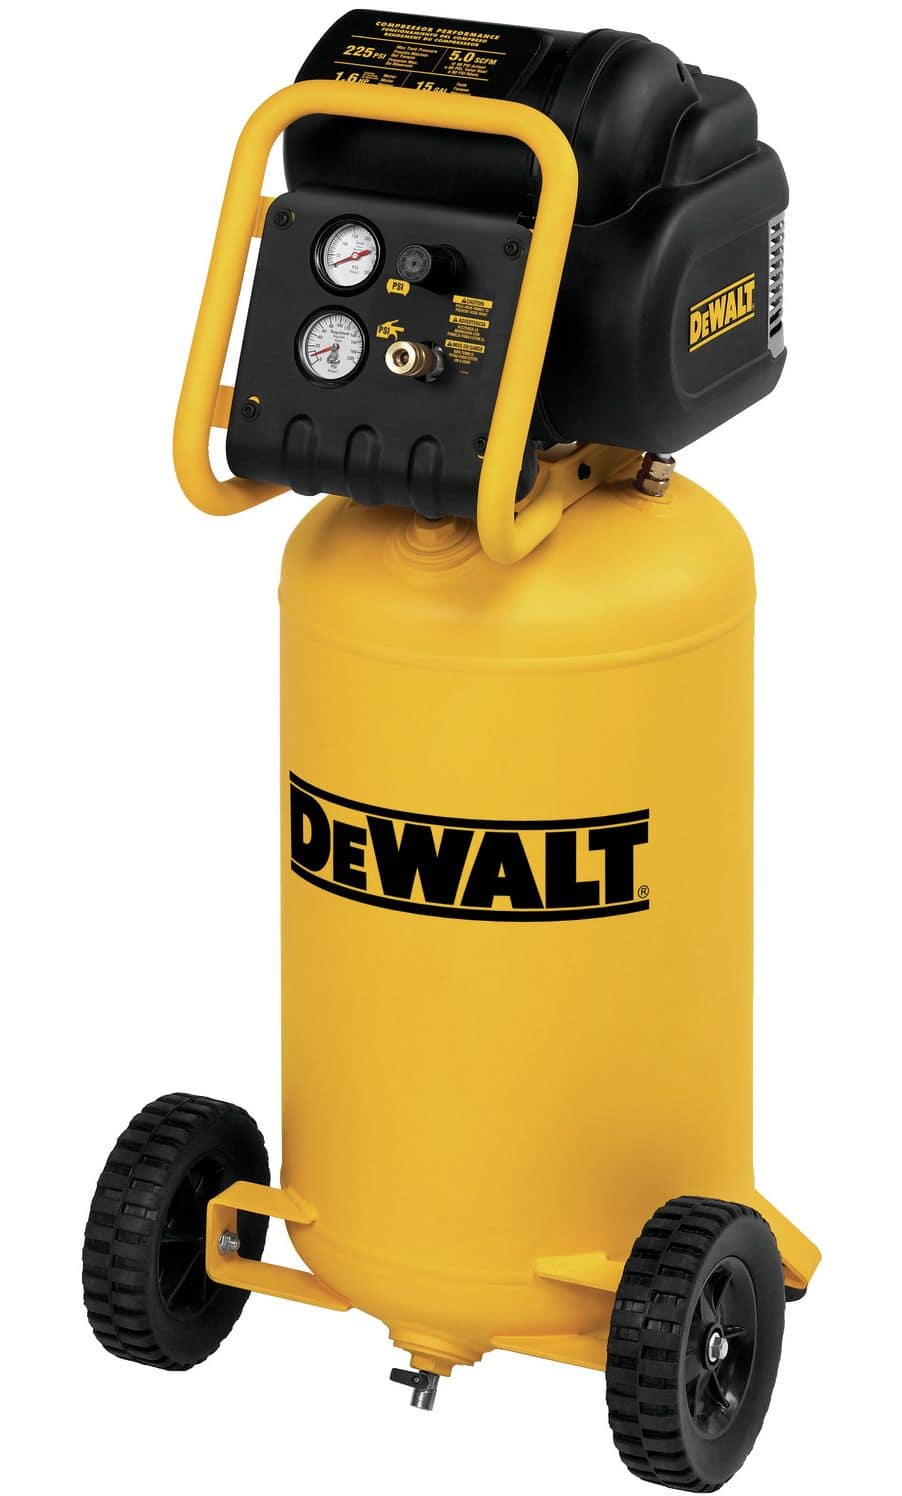 DEWALT D55168 15-Gallon Oil-Free Portable Workshop Vertical Air